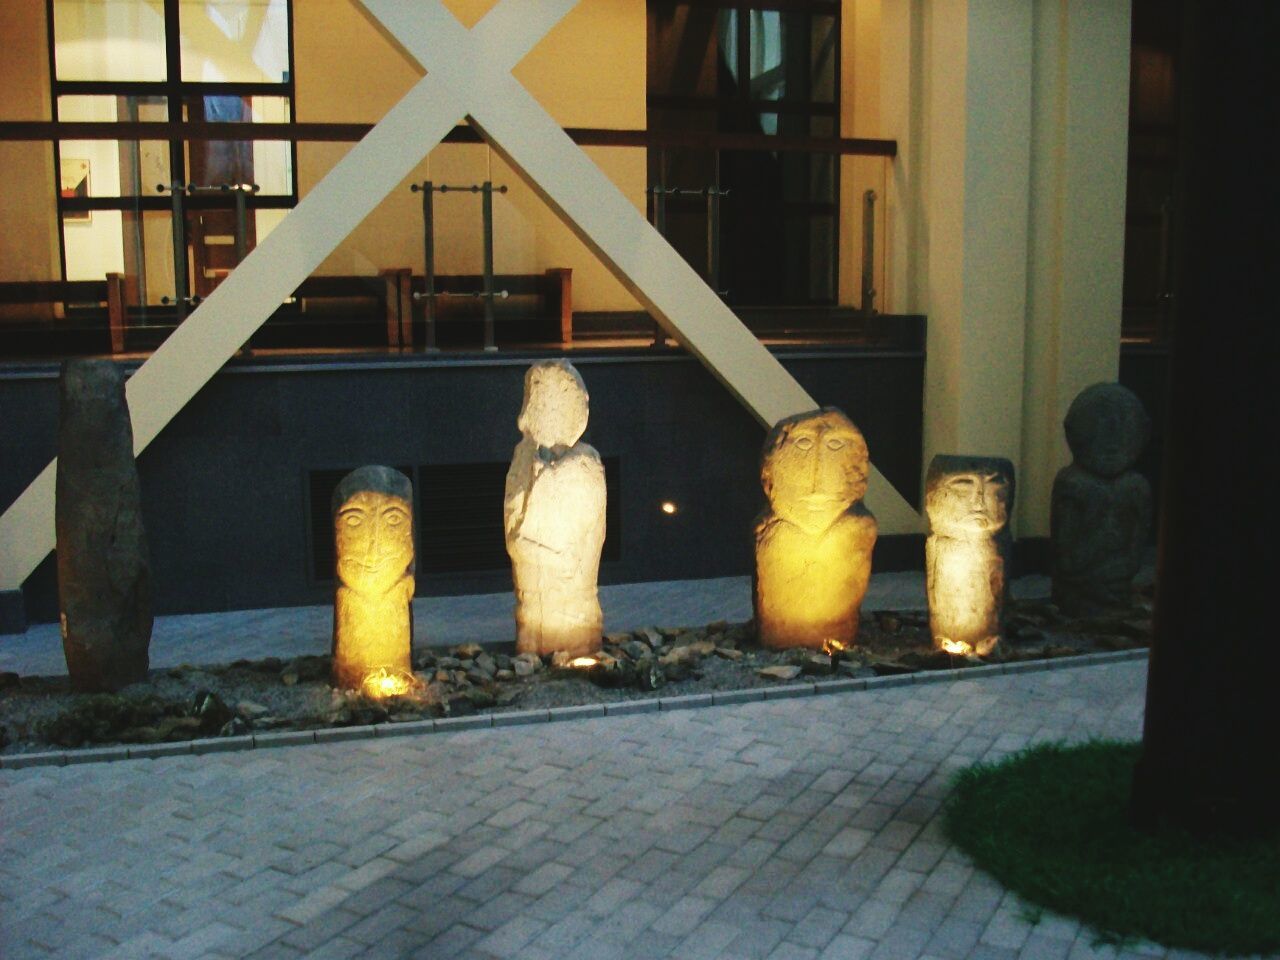 STATUE OF ILLUMINATED LAMP